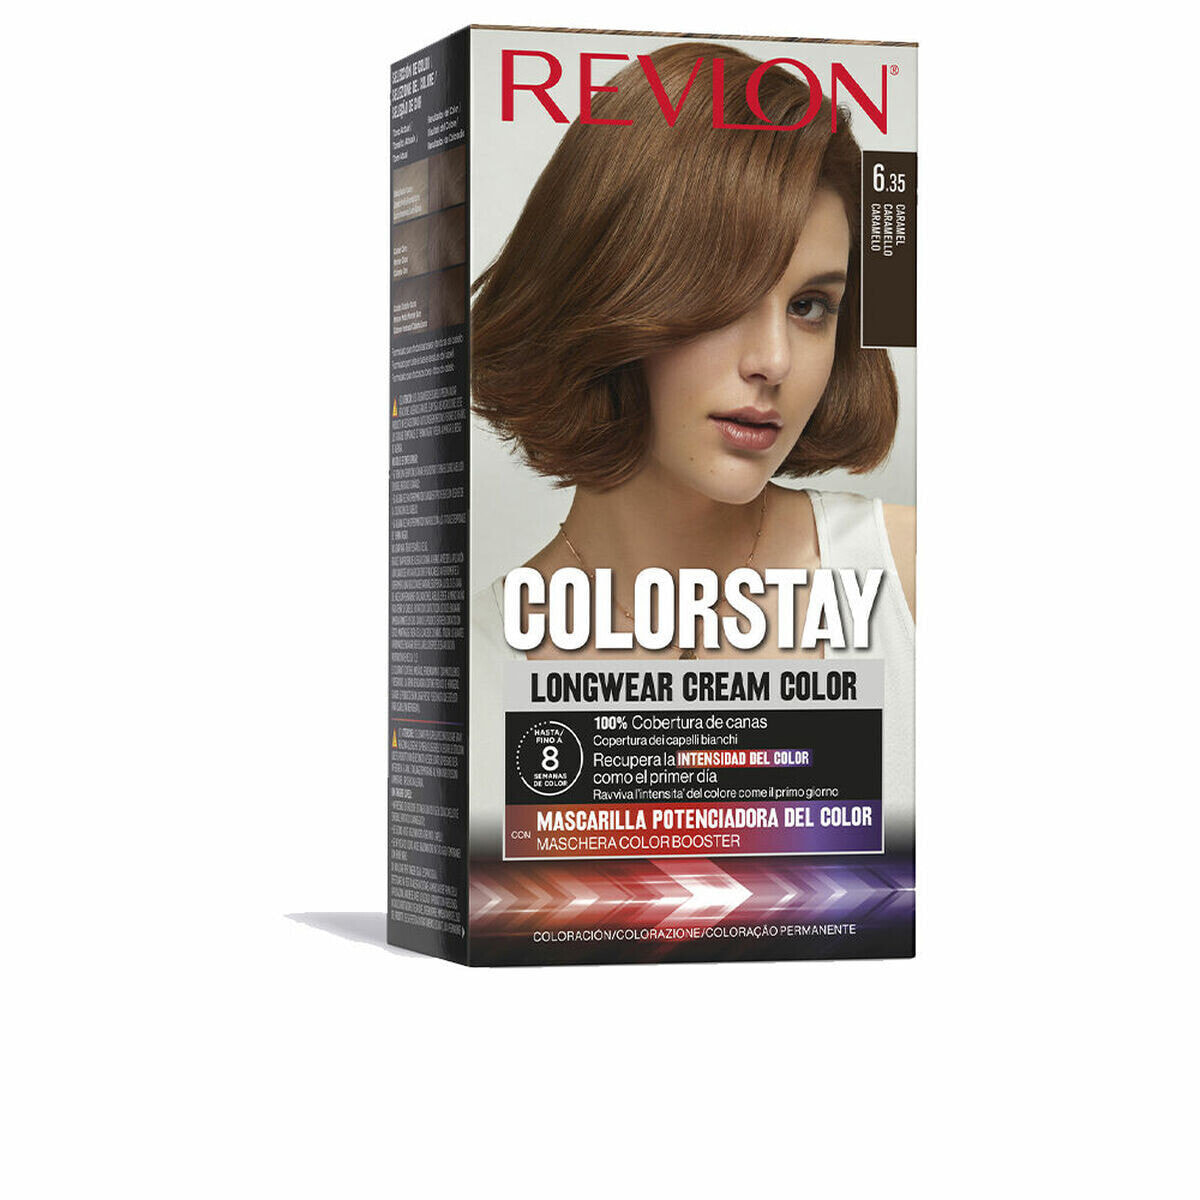 Permanent Dye Revlon Colorstay Caramel Nº 6.35